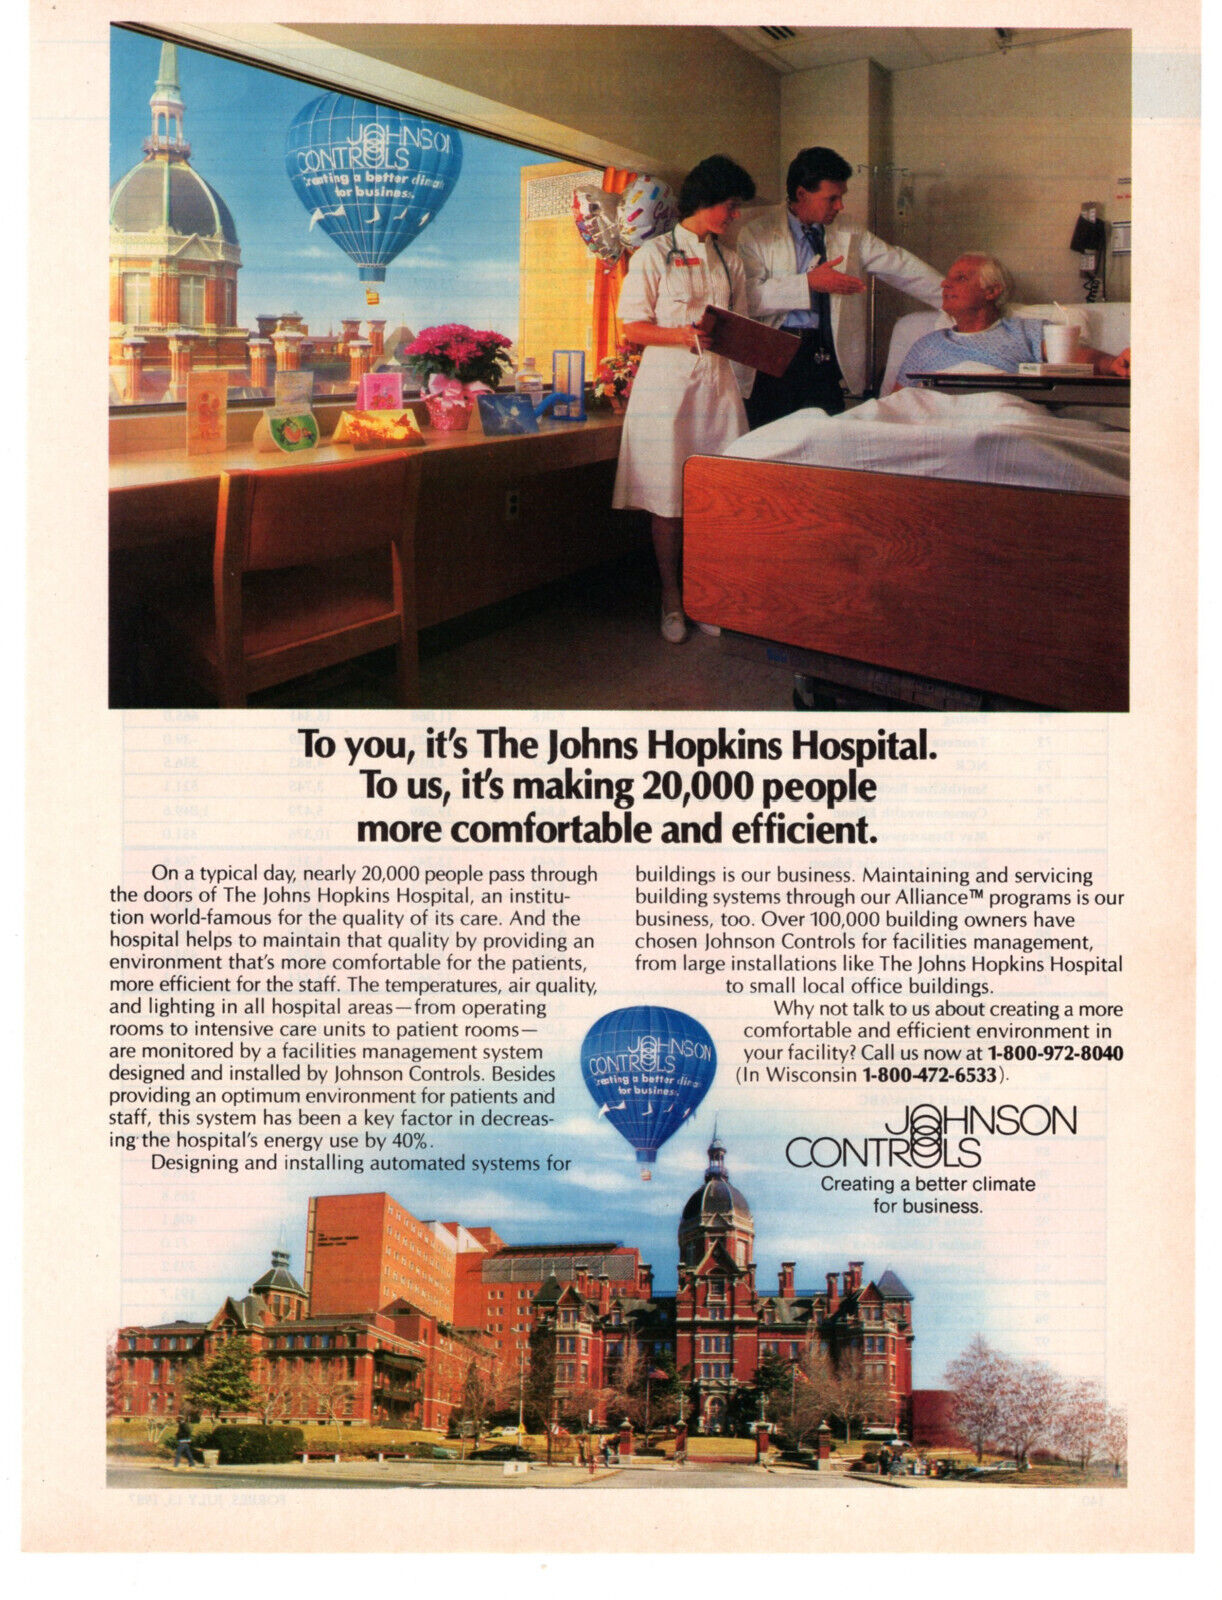 JOHNSON CONTROLS John Hopkins Hospital 1987 Vintage Print Ad Original